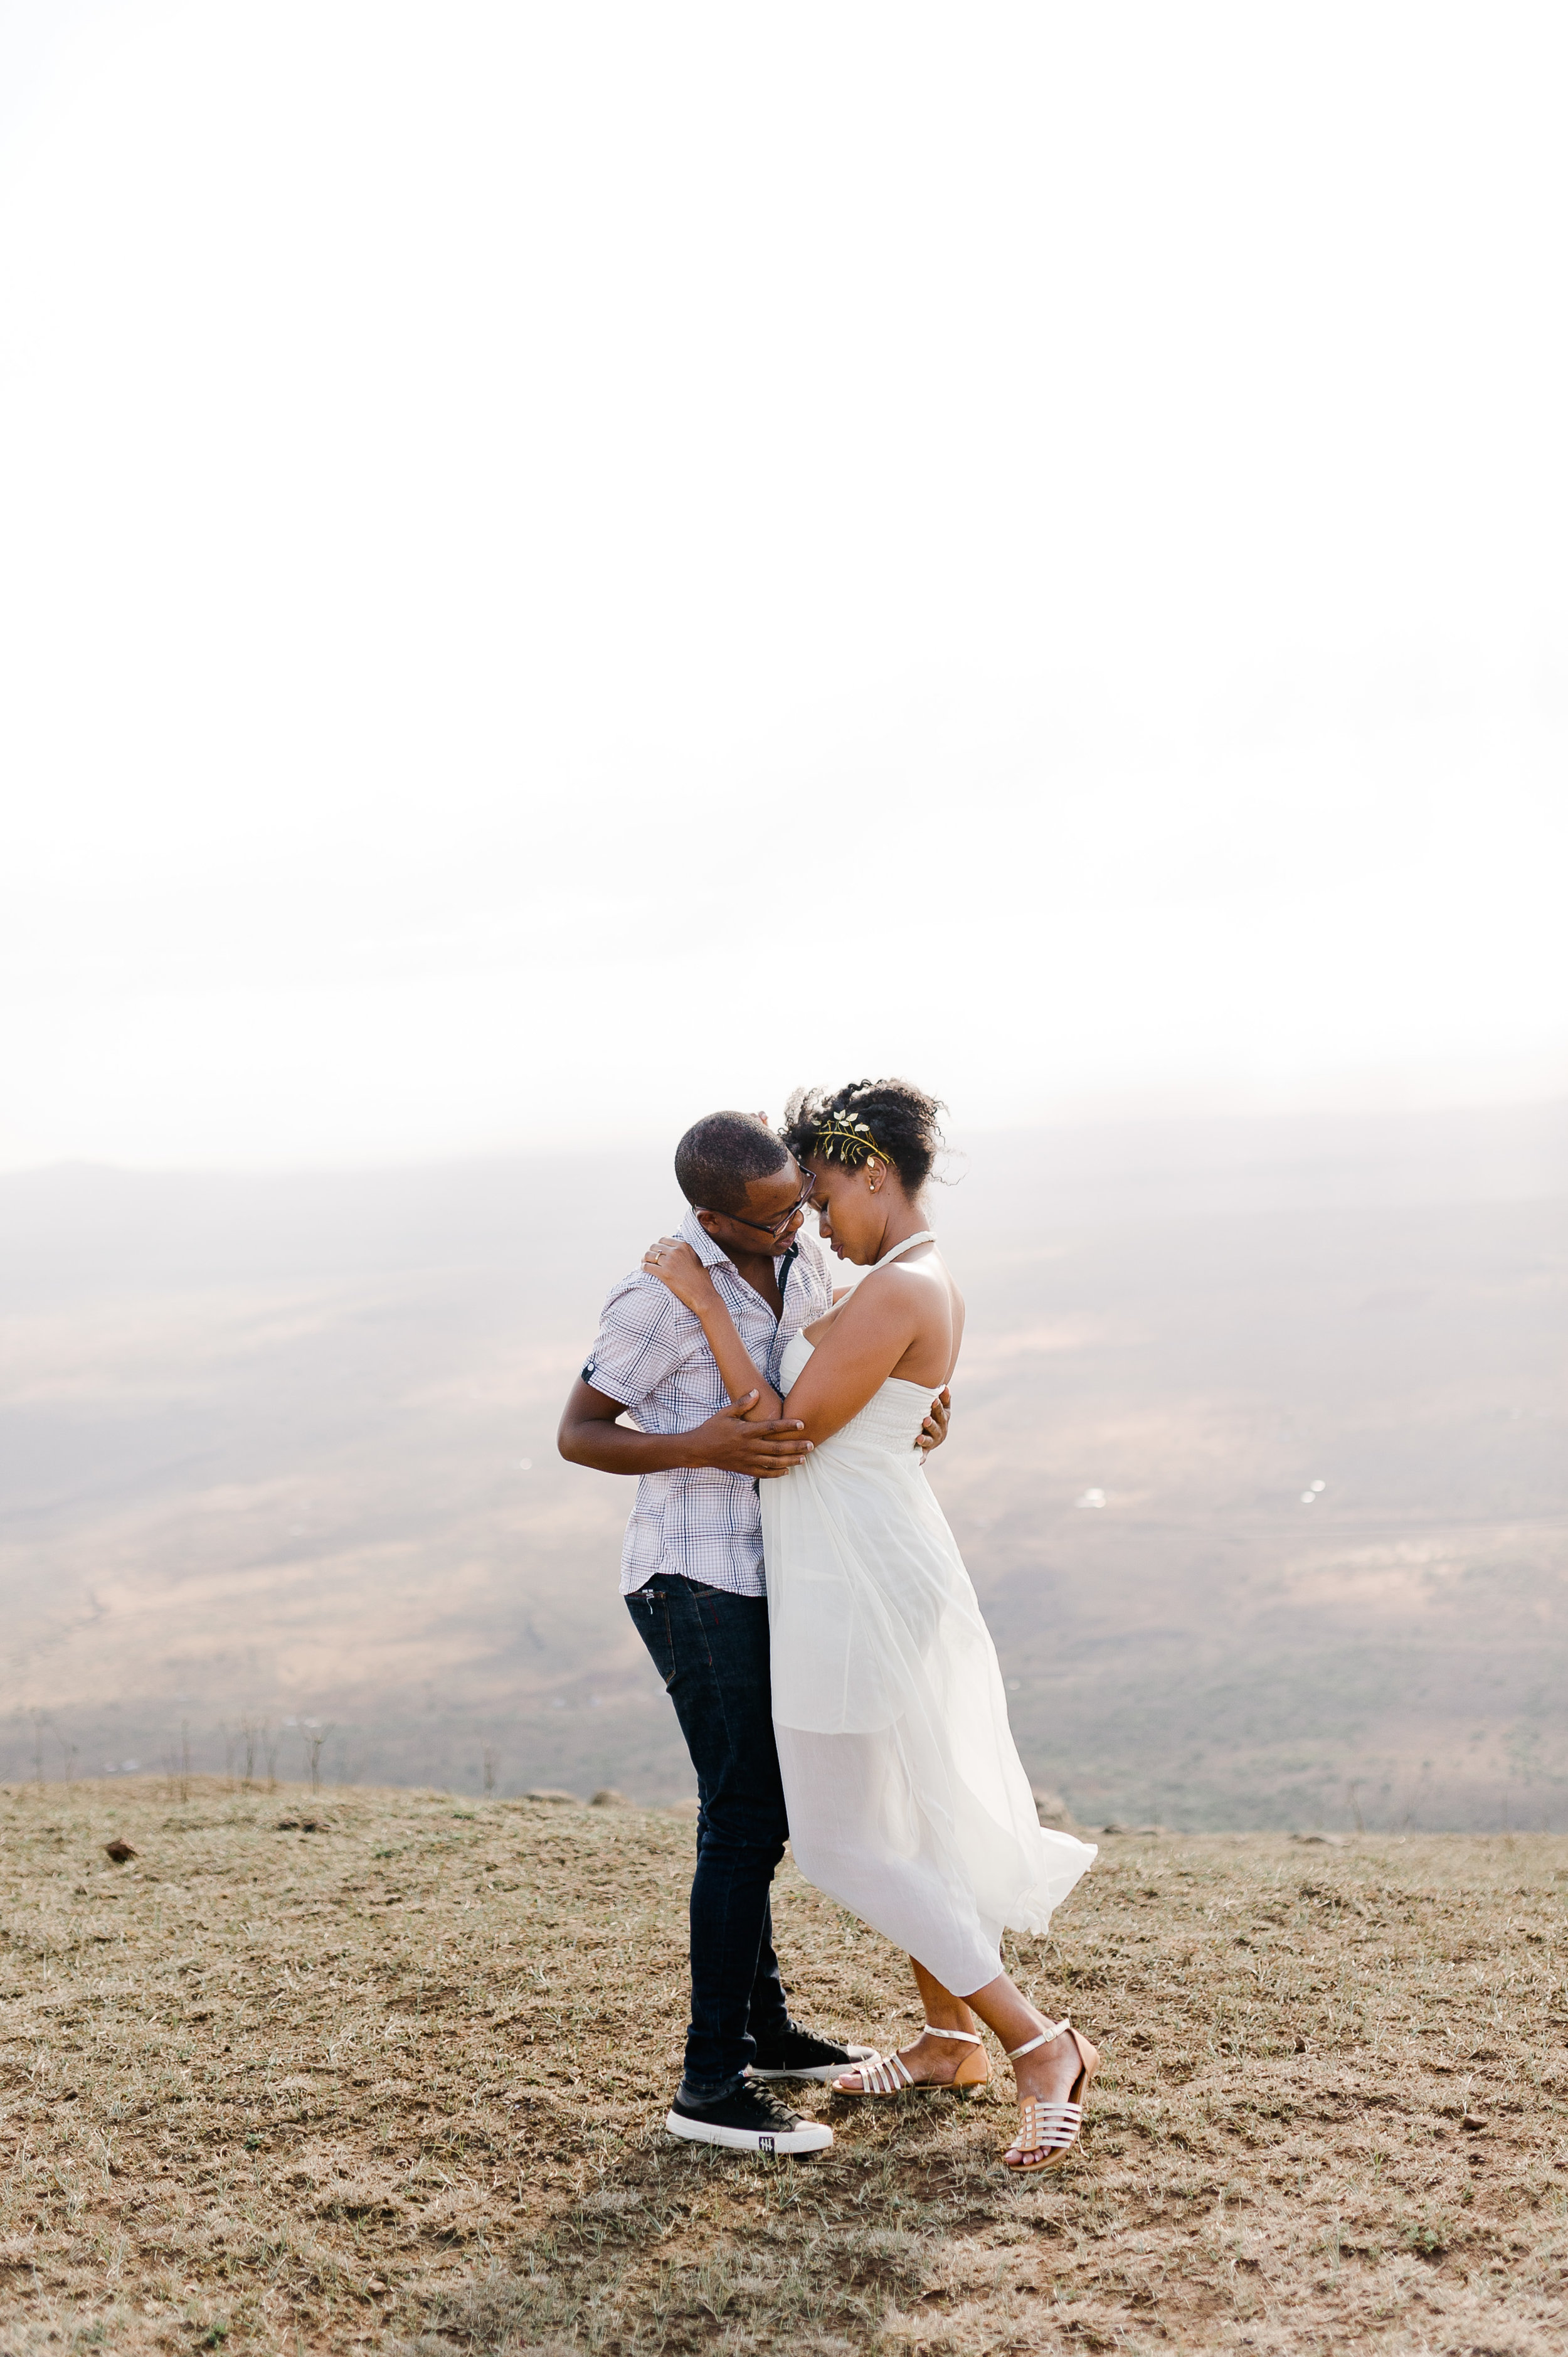 Anna-Hari-Photography-Kenyan-Wedding-Photographer-Ngong-Hills-Elopement-Kenya-21.jpg